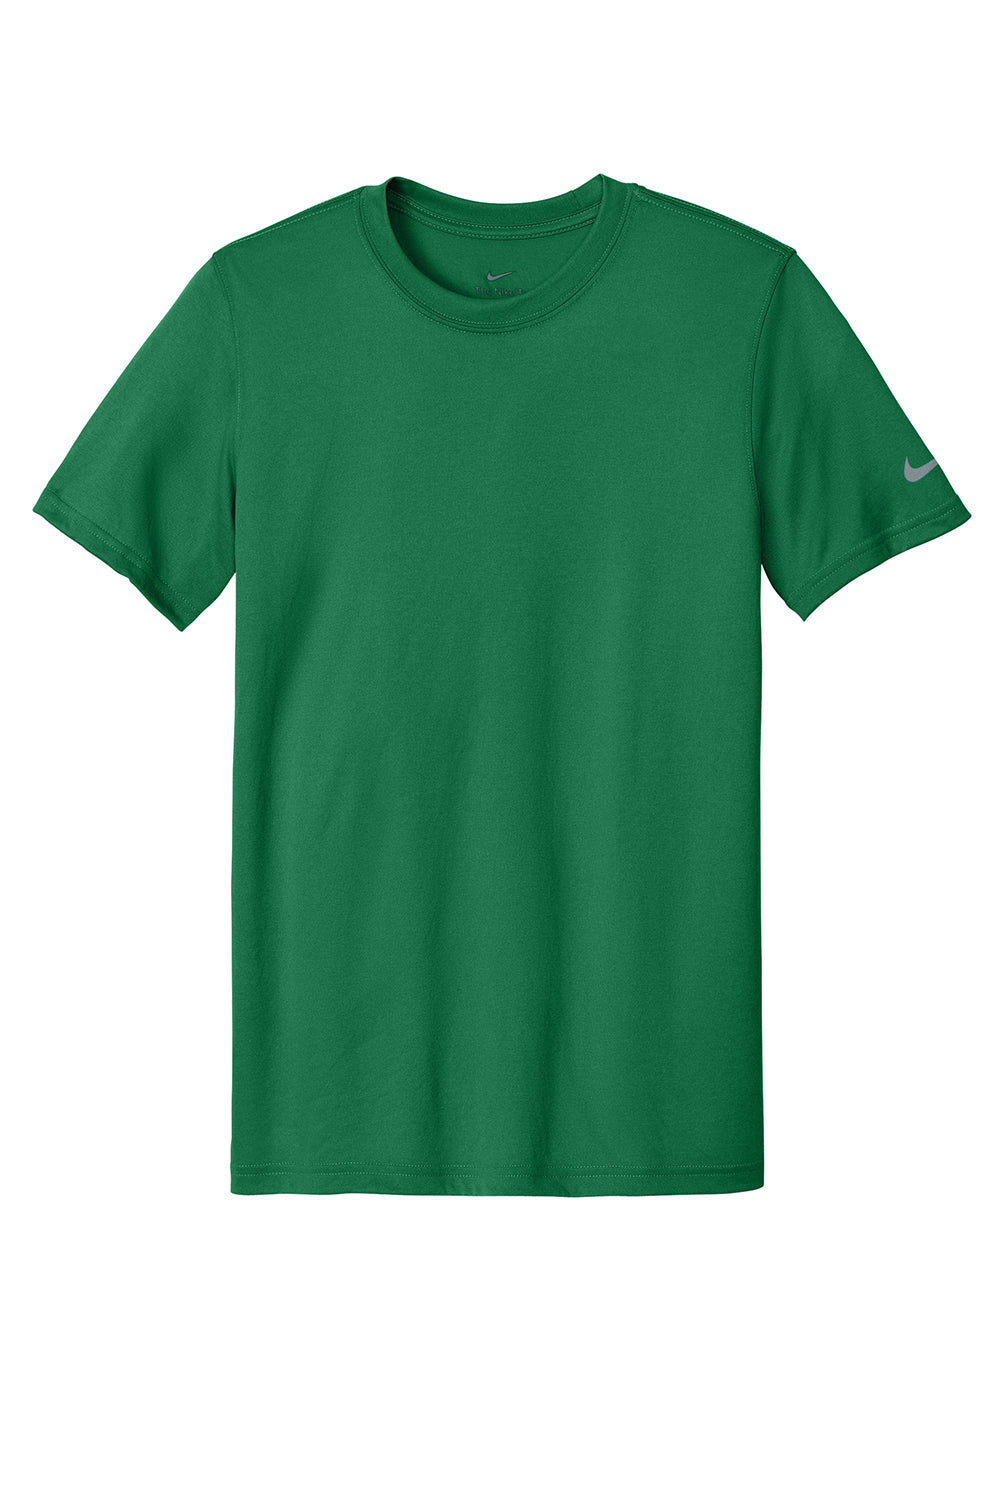 Nike NKDX8730 Mens rLegend Dri-Fit Moisture Wicking Short Sleeve Crewneck T-Shirt Gorge Green Flat Front